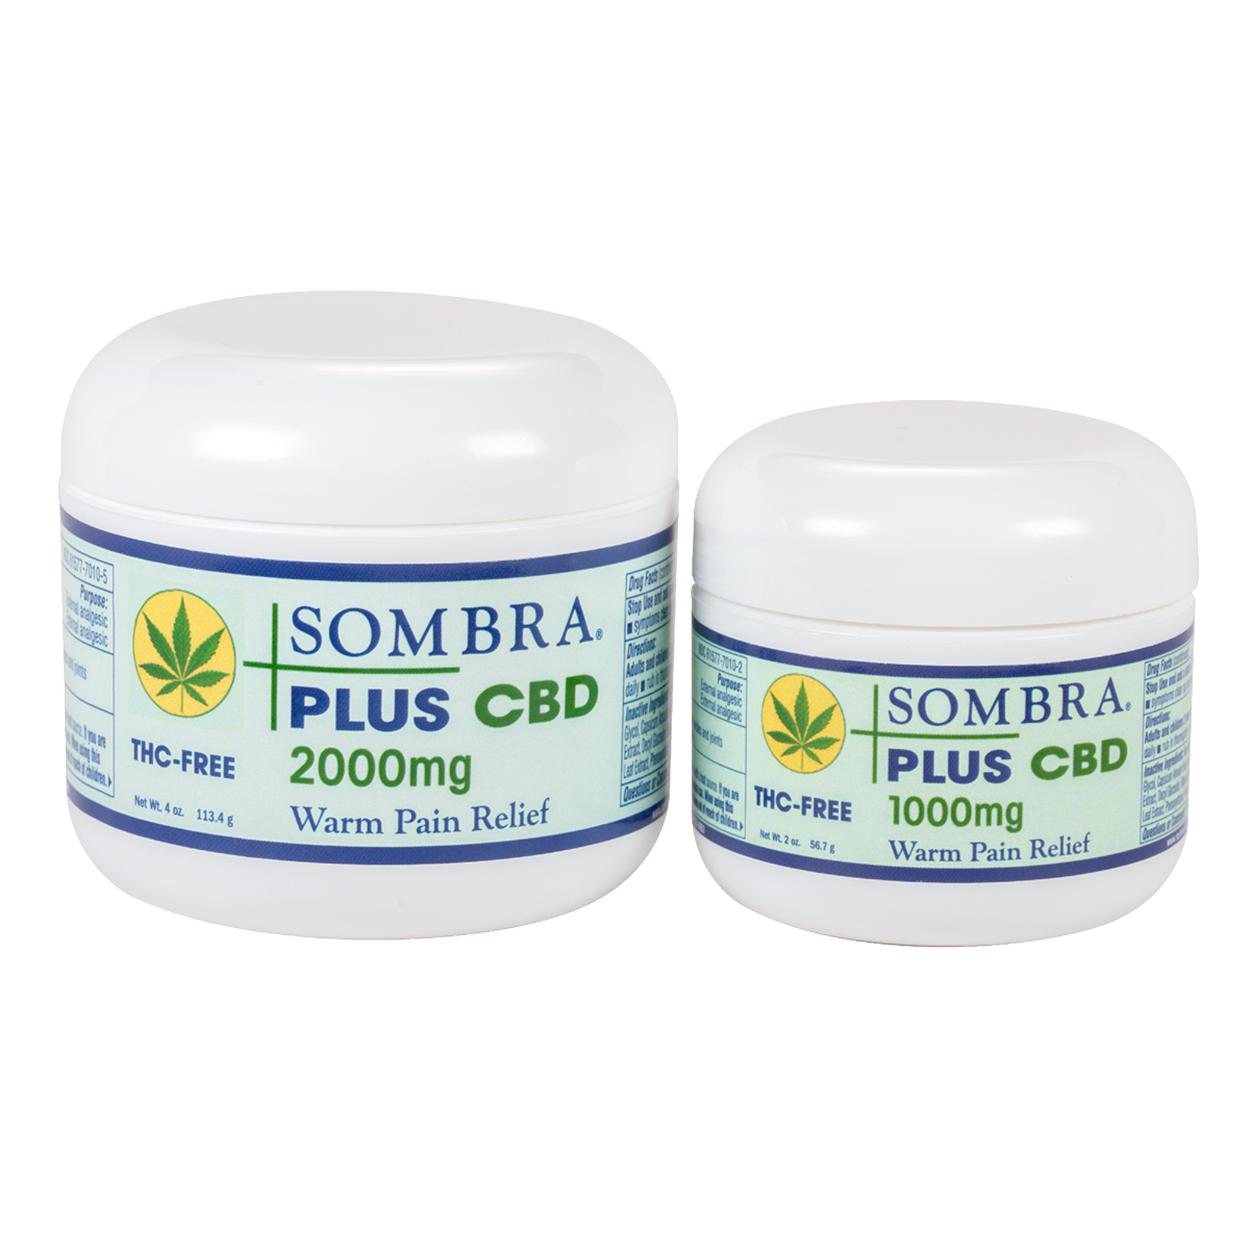 Sombra - PLUS CBD Warm Pain Relief - Click to Shop